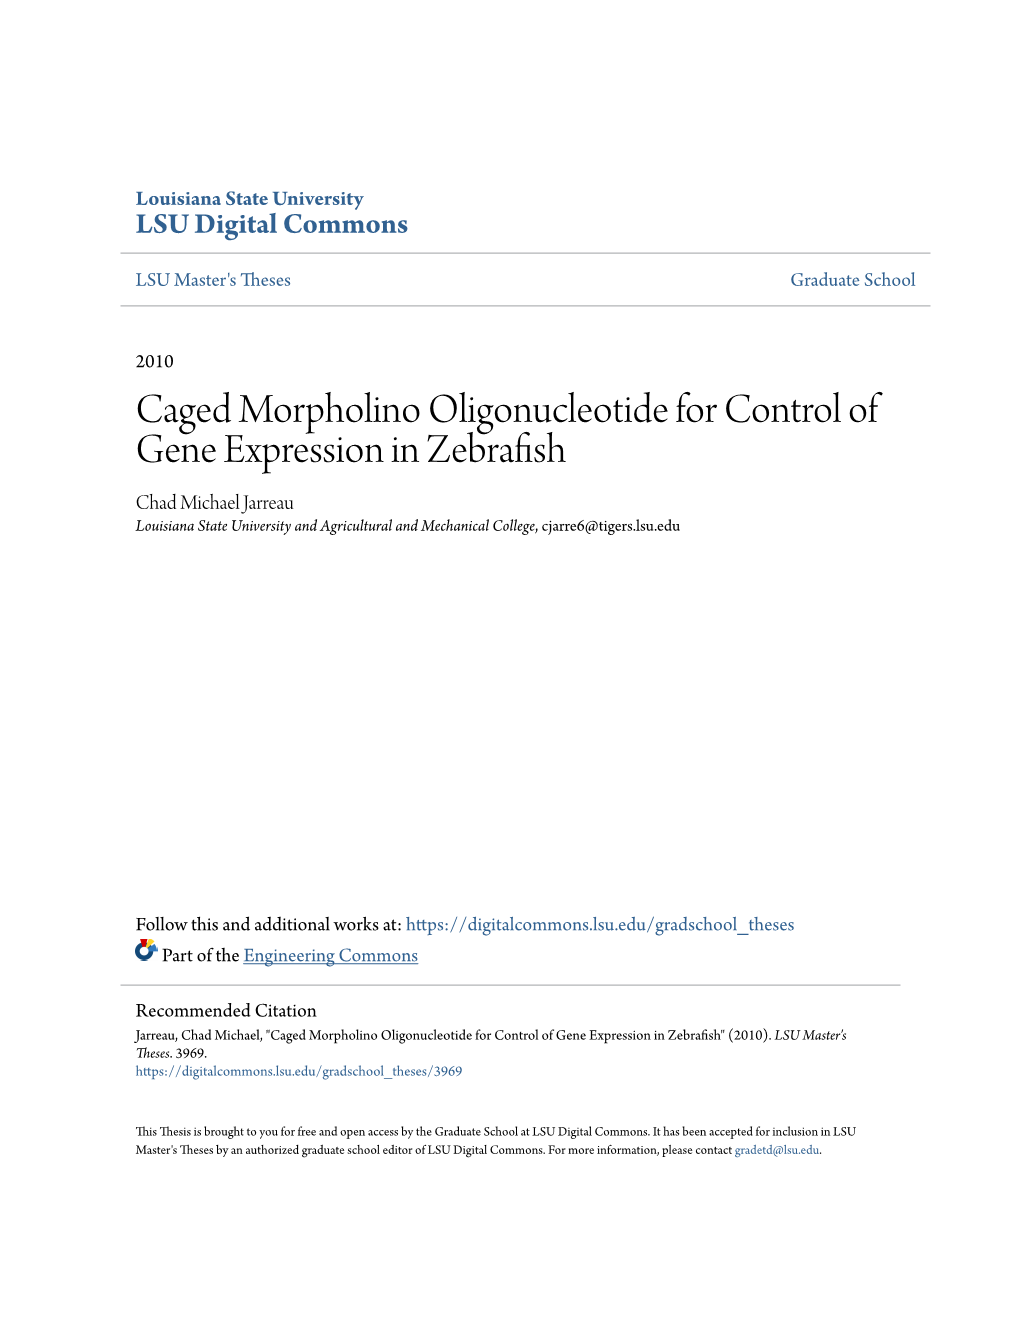 Caged Morpholino Oligonucleotide for Control of Gene Expression In